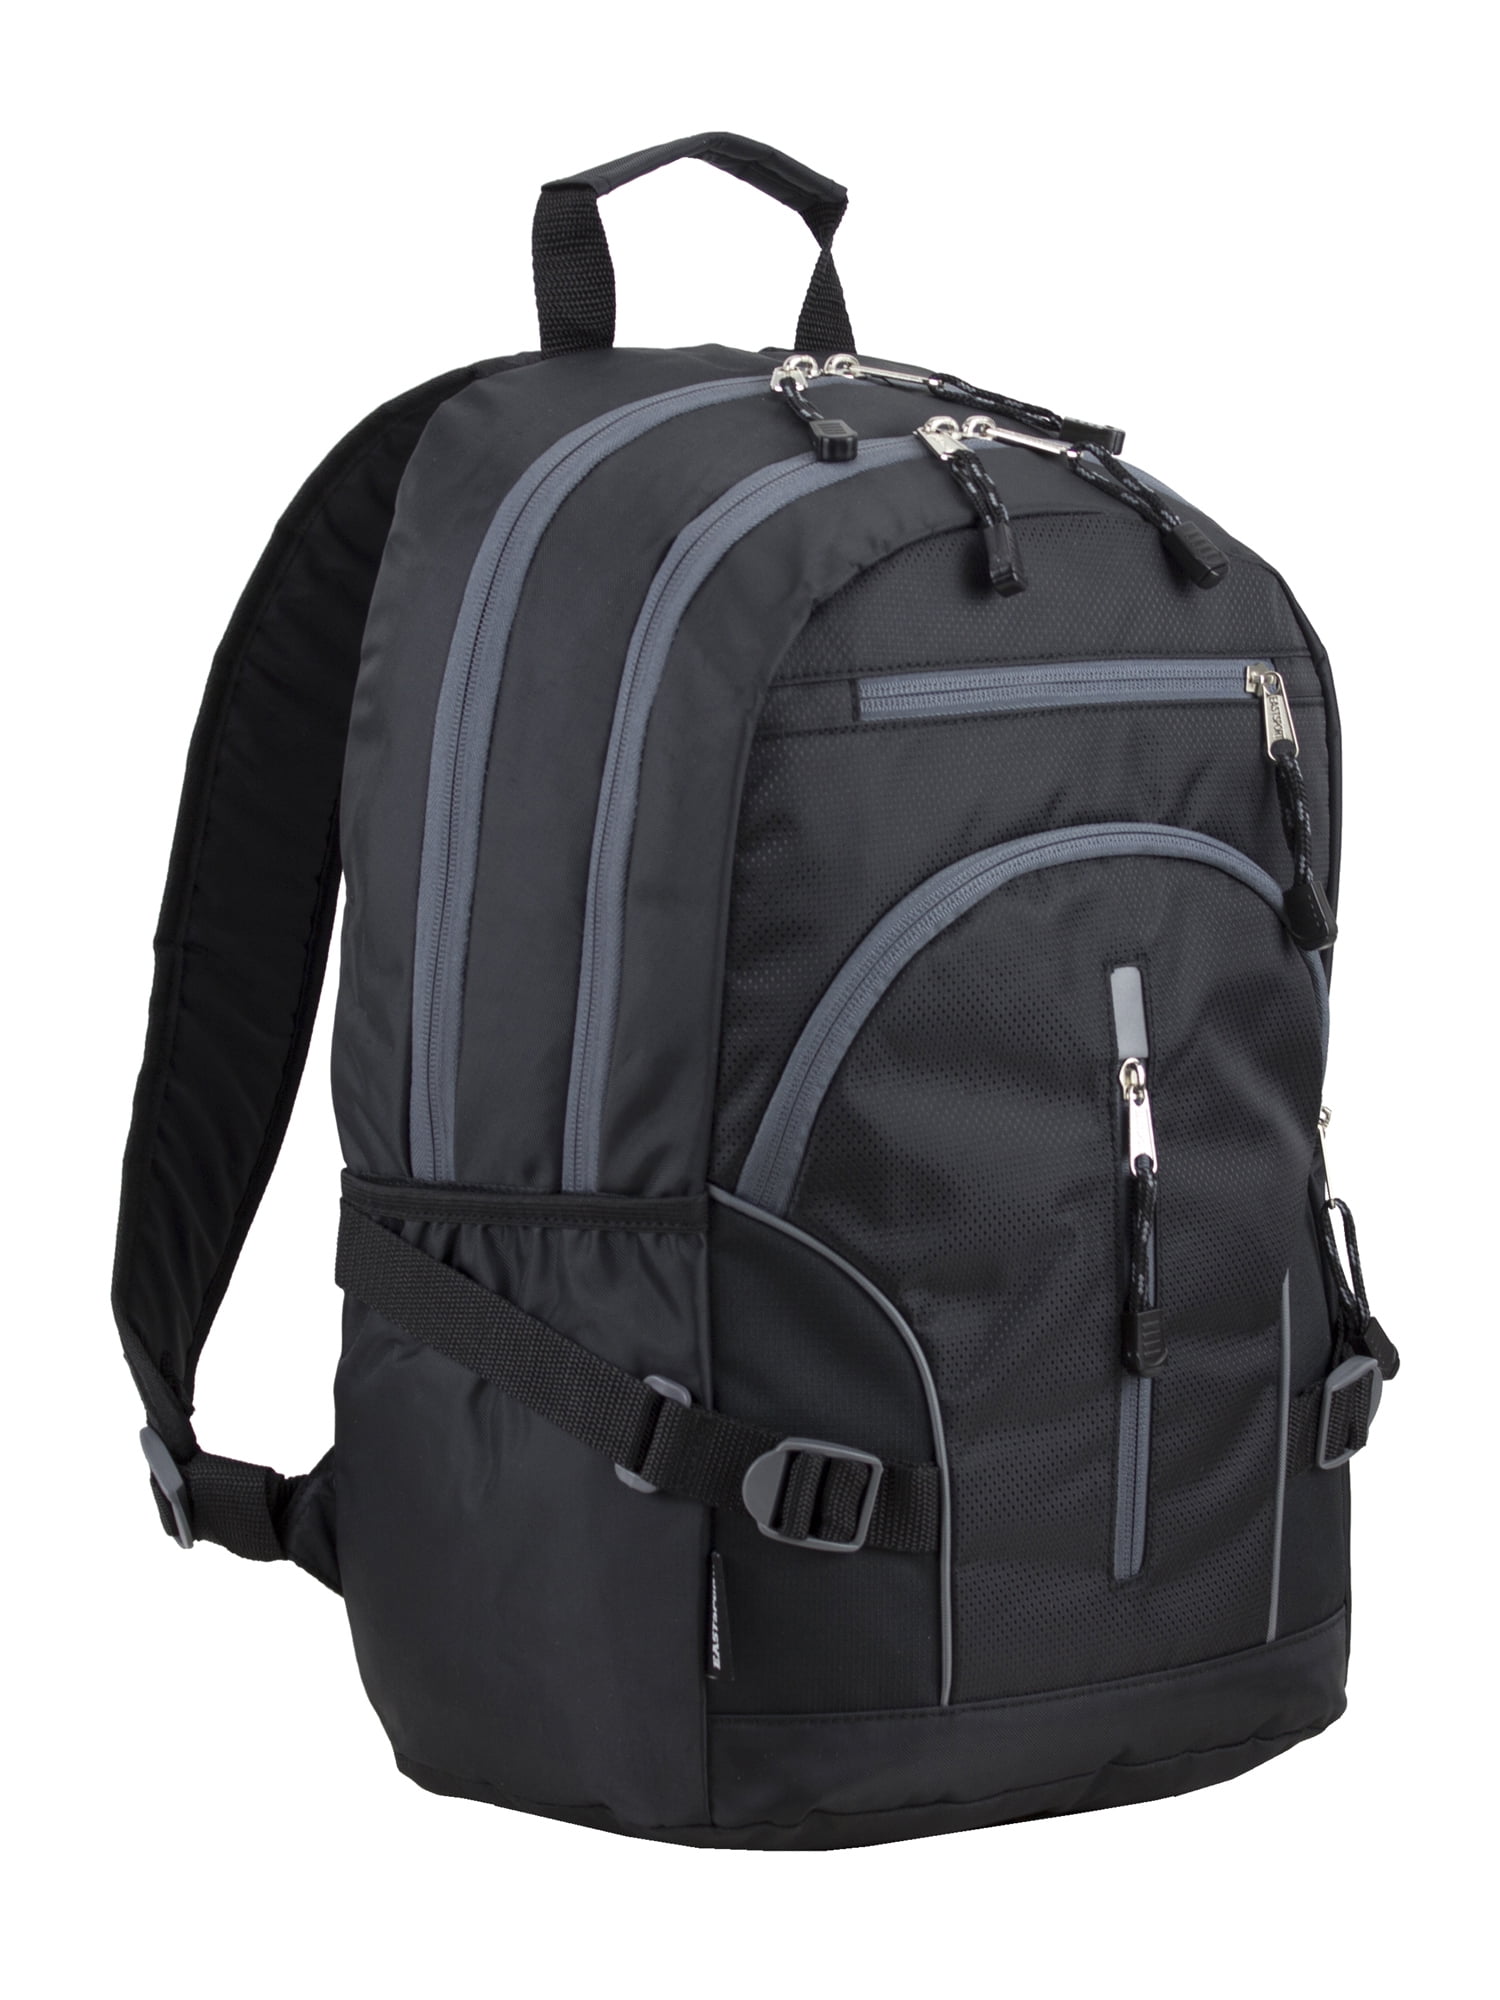 Eastport Multipurpose Dynamic Backpack 